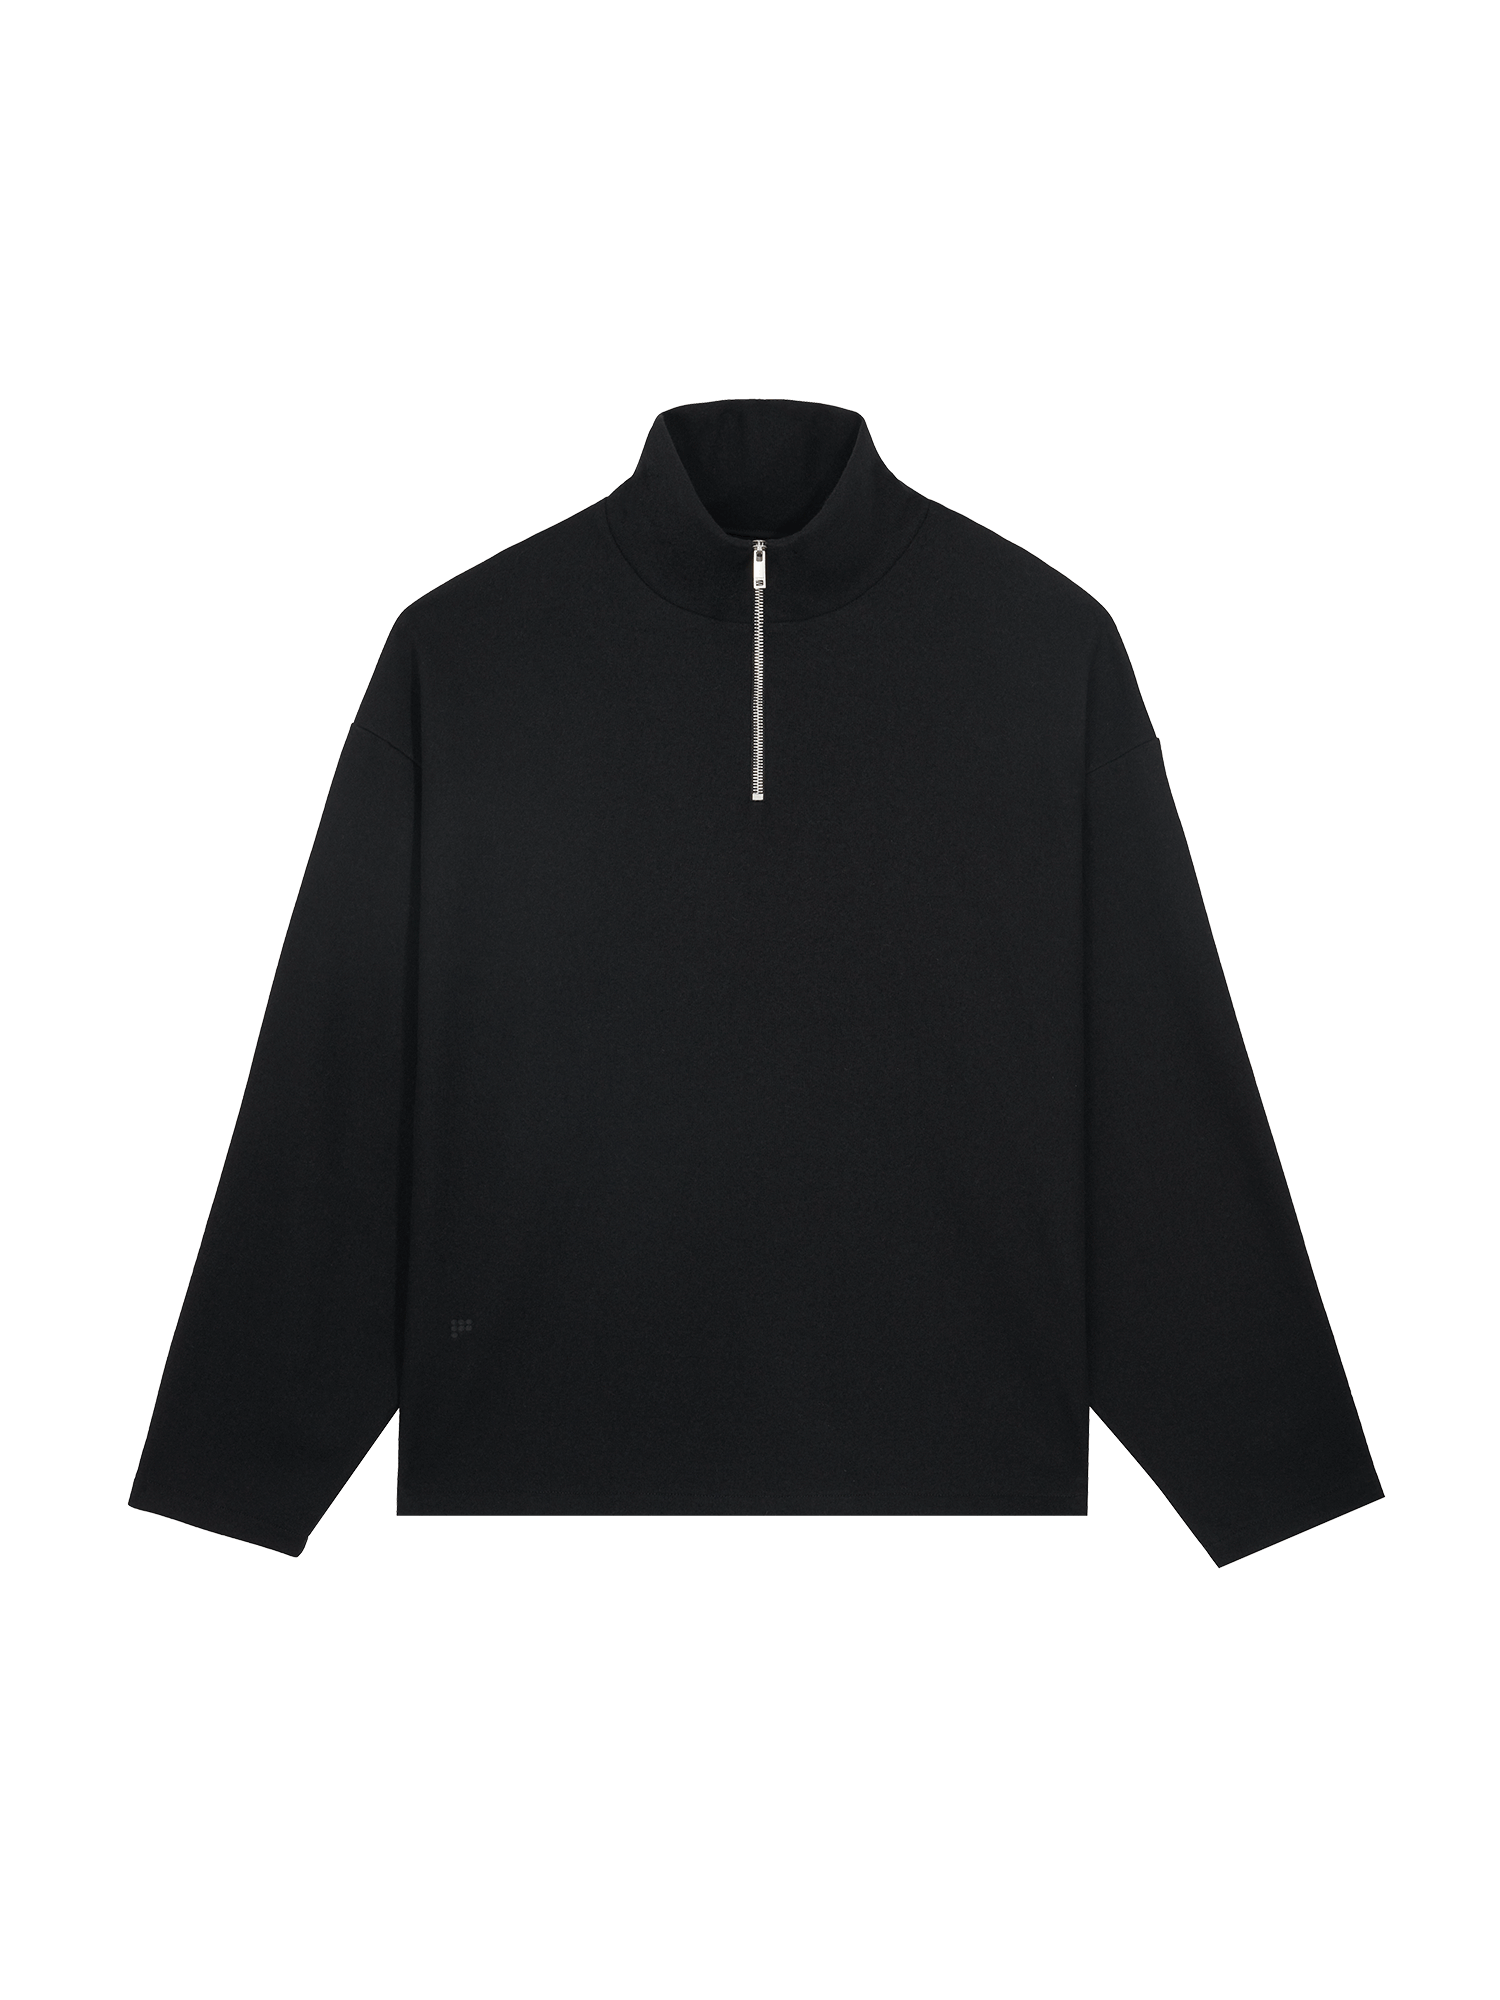 Mens-Wool-Jersey-Half-Zip-Sweatshirt-Black-packshot-3